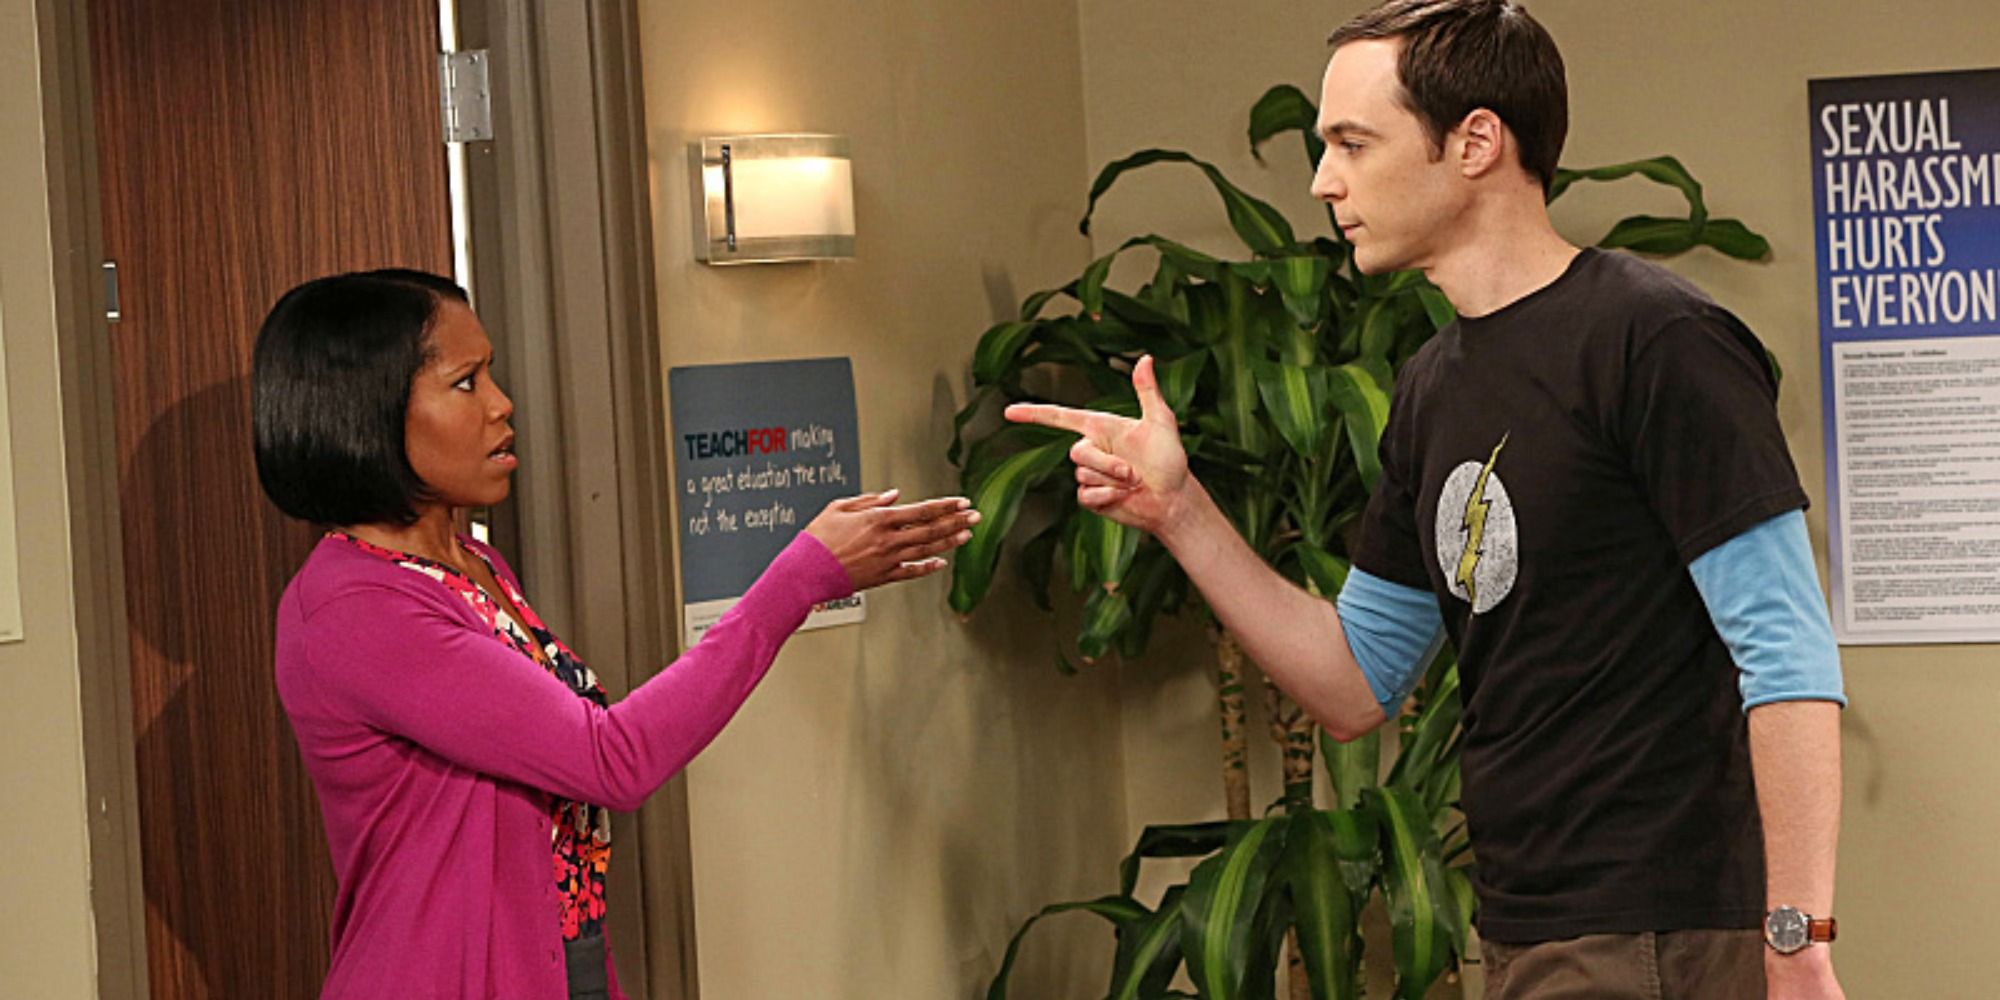 Regina King as Janine Davis and Jim Parsons as Sheldon Cooper in The Big Bang Theory